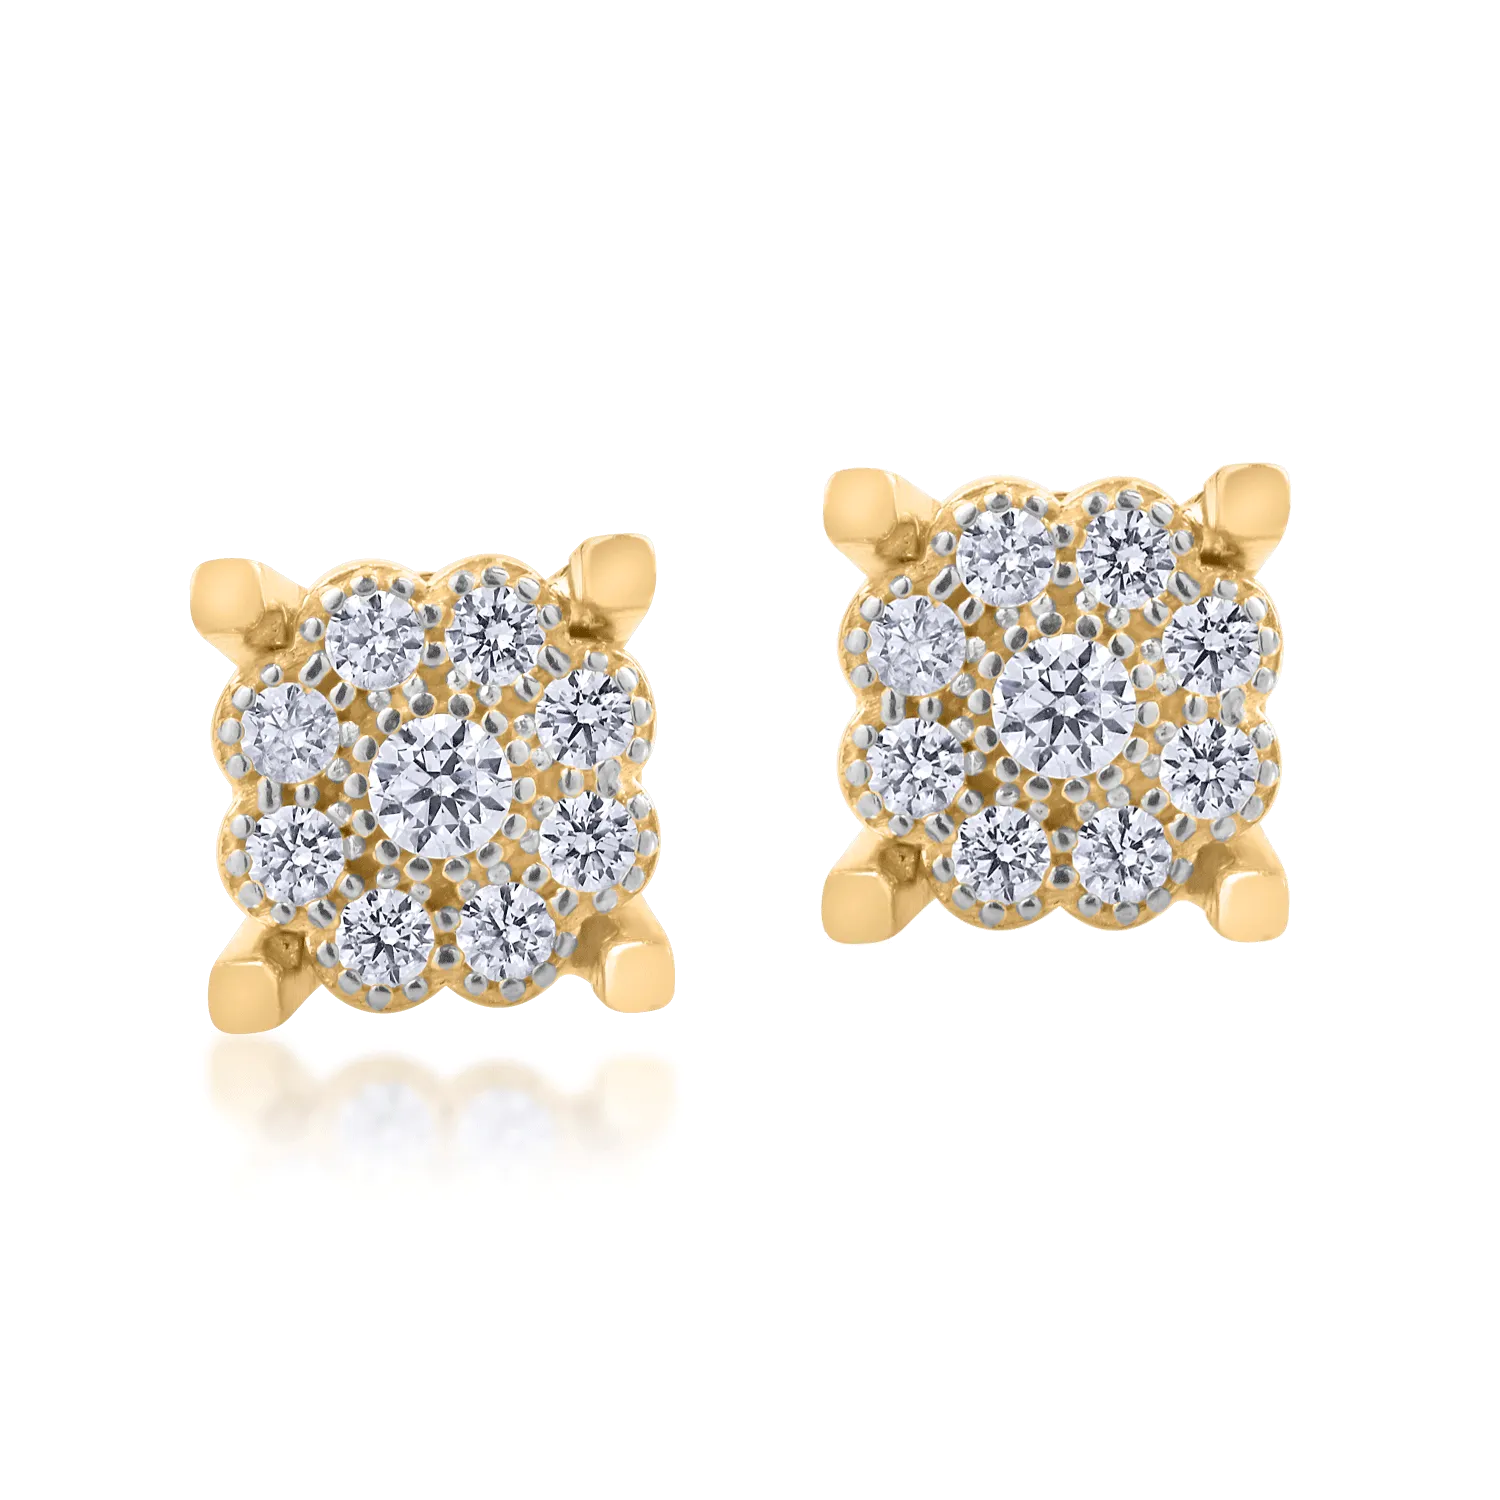 White-yellow gold stud earrings with zirconia